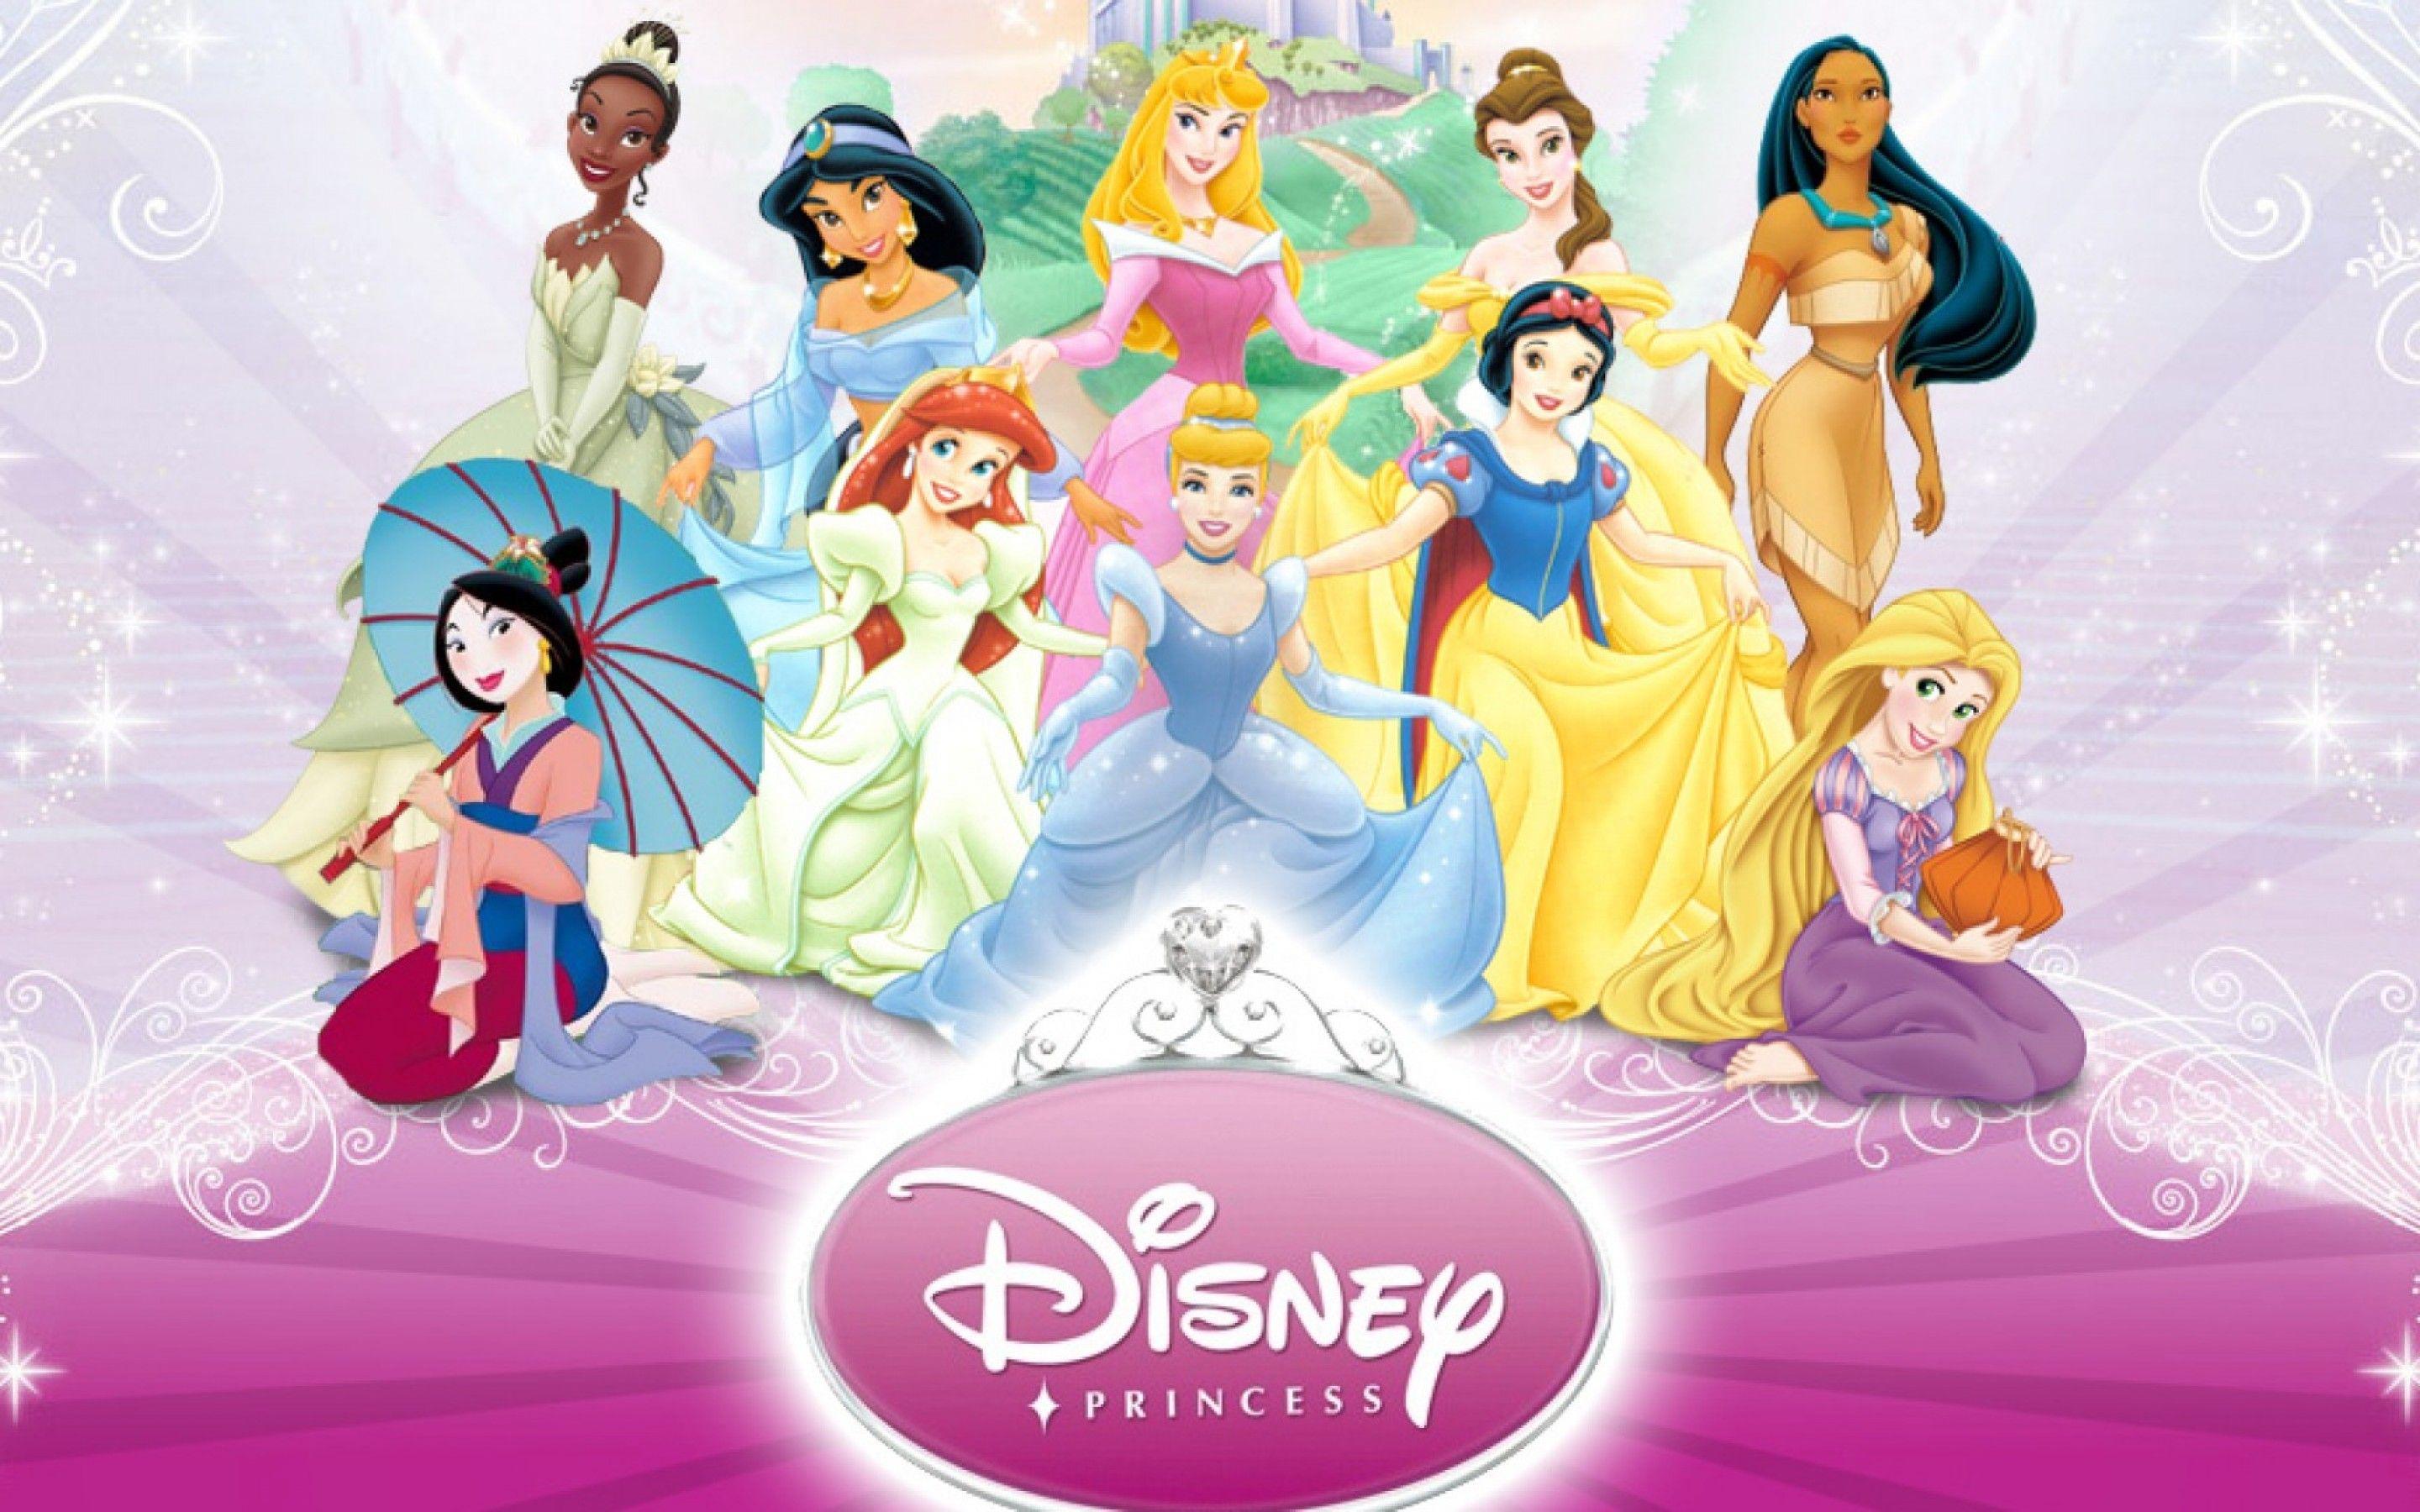 Download Disney Characters Princesses Wallpaper | Wallpapers.com